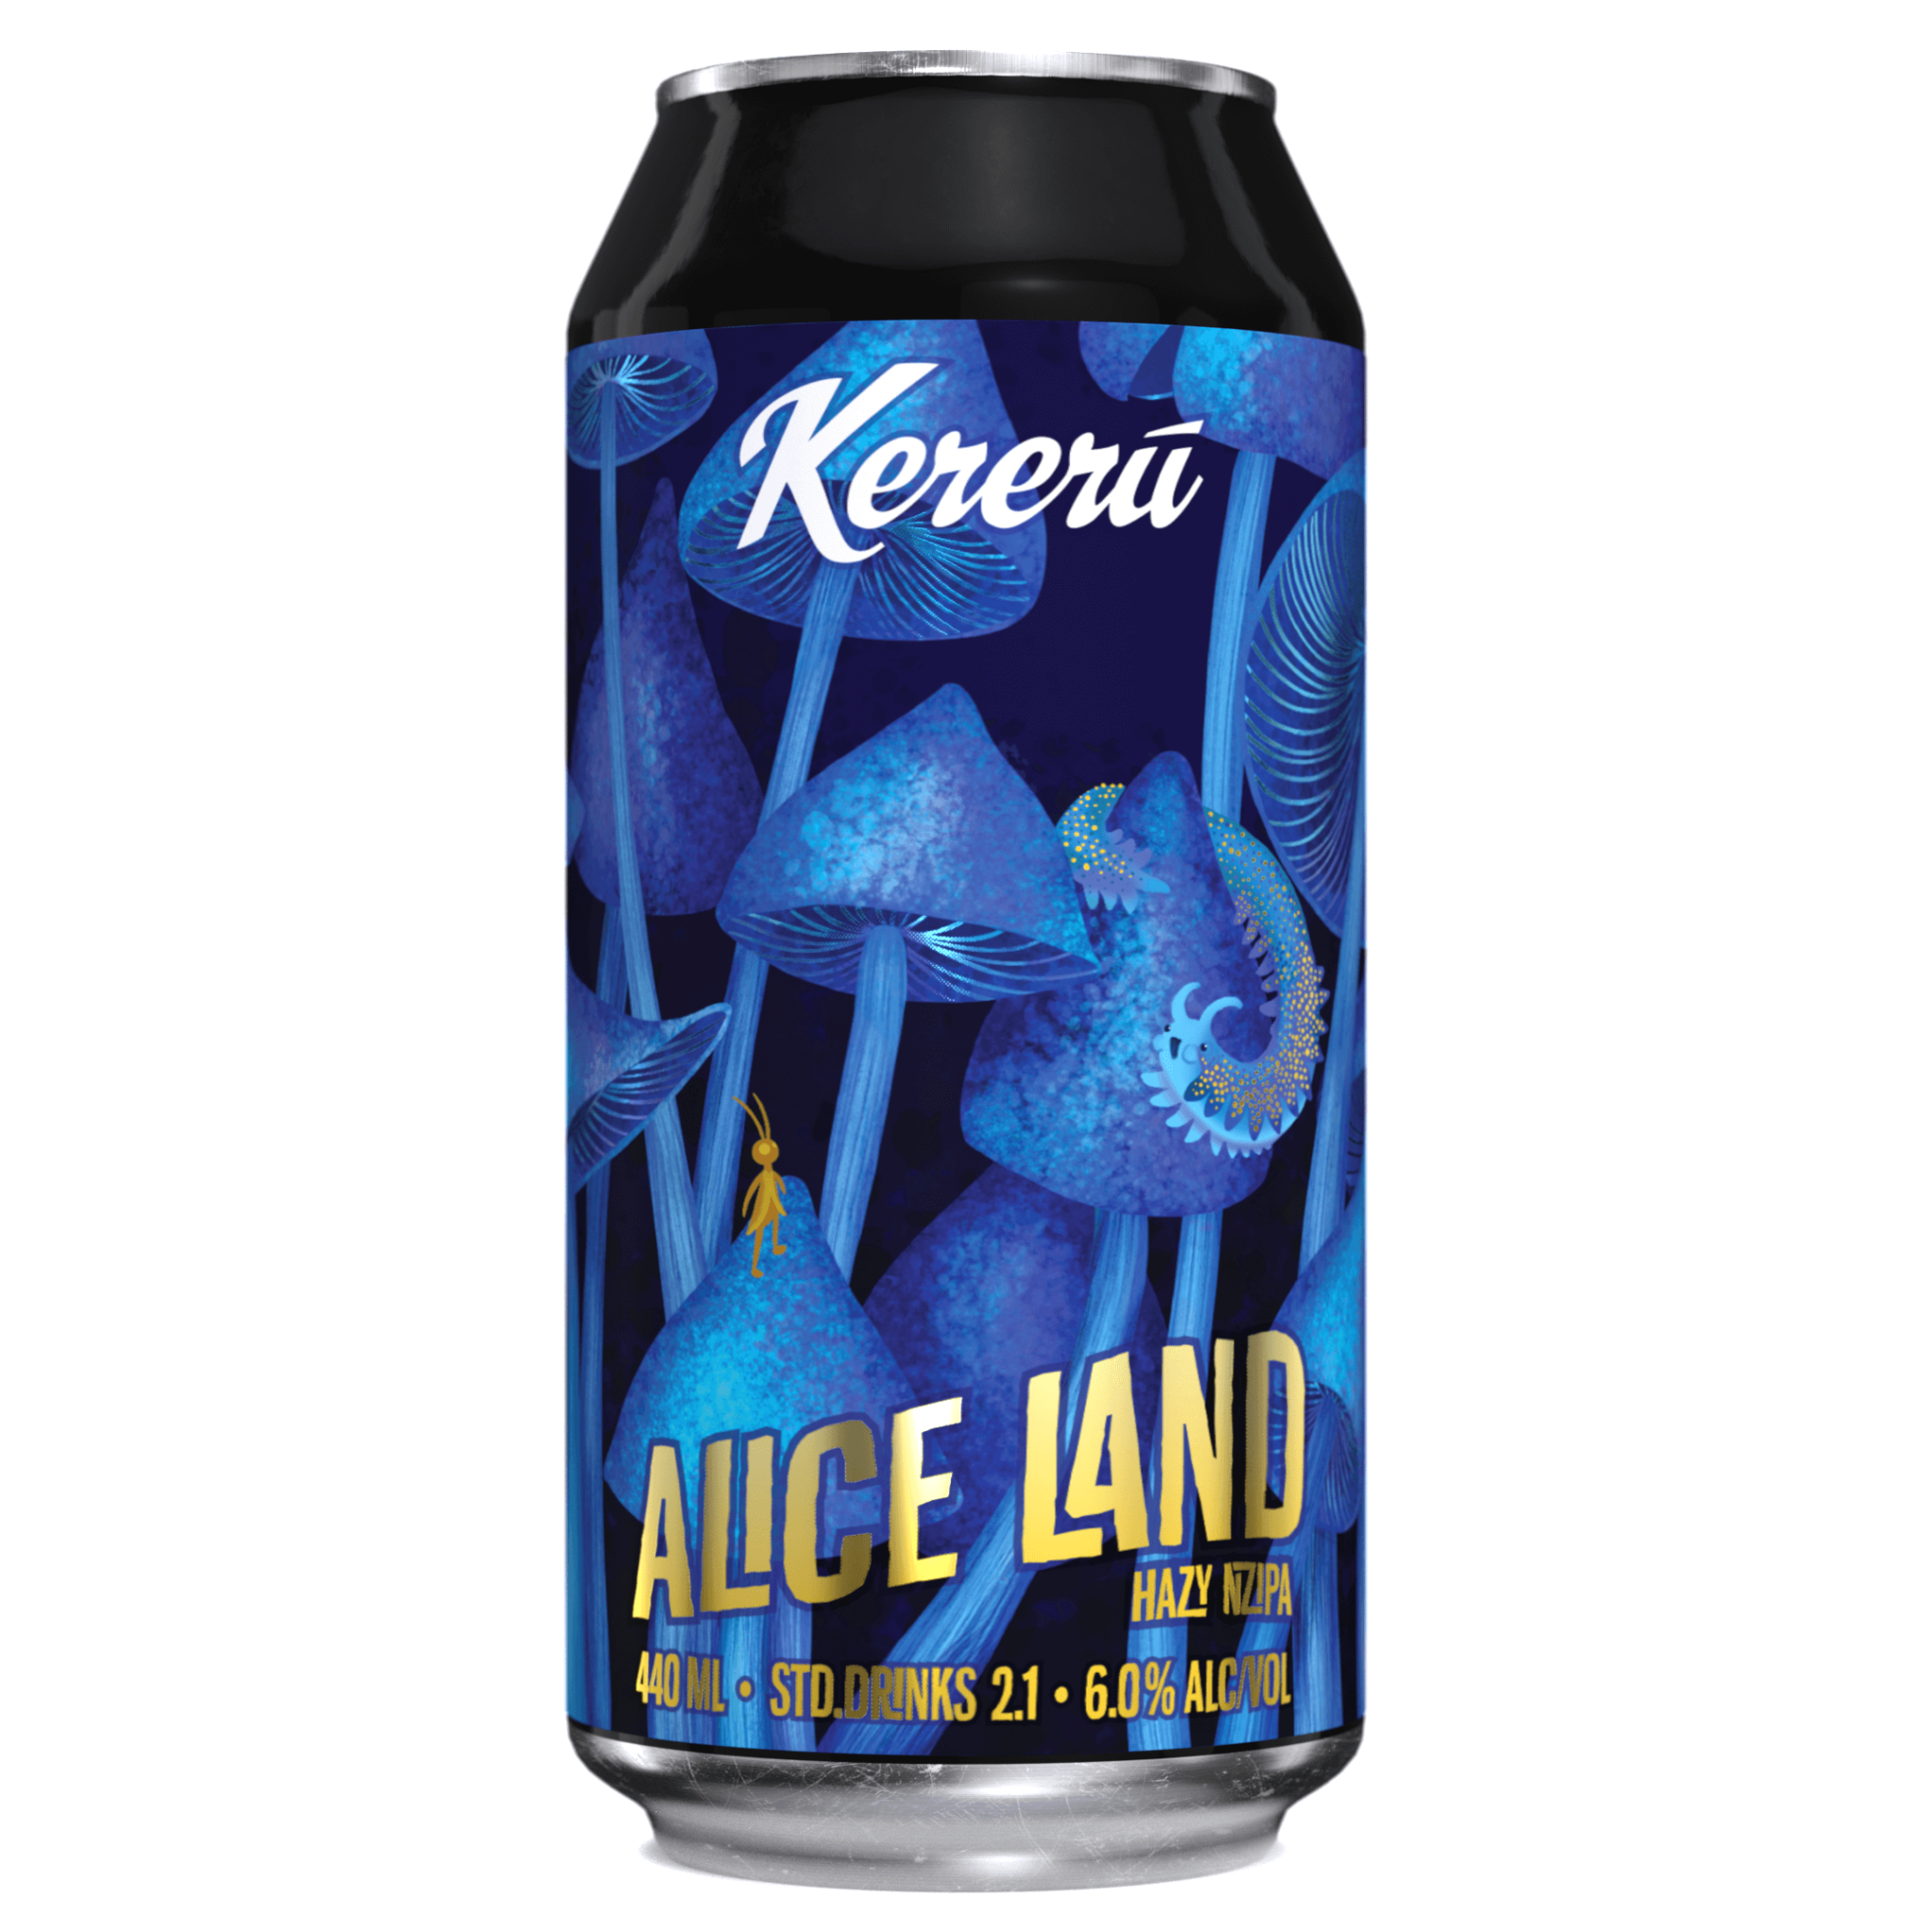 Featured Beer: Alice Land Hazy NZ IPA